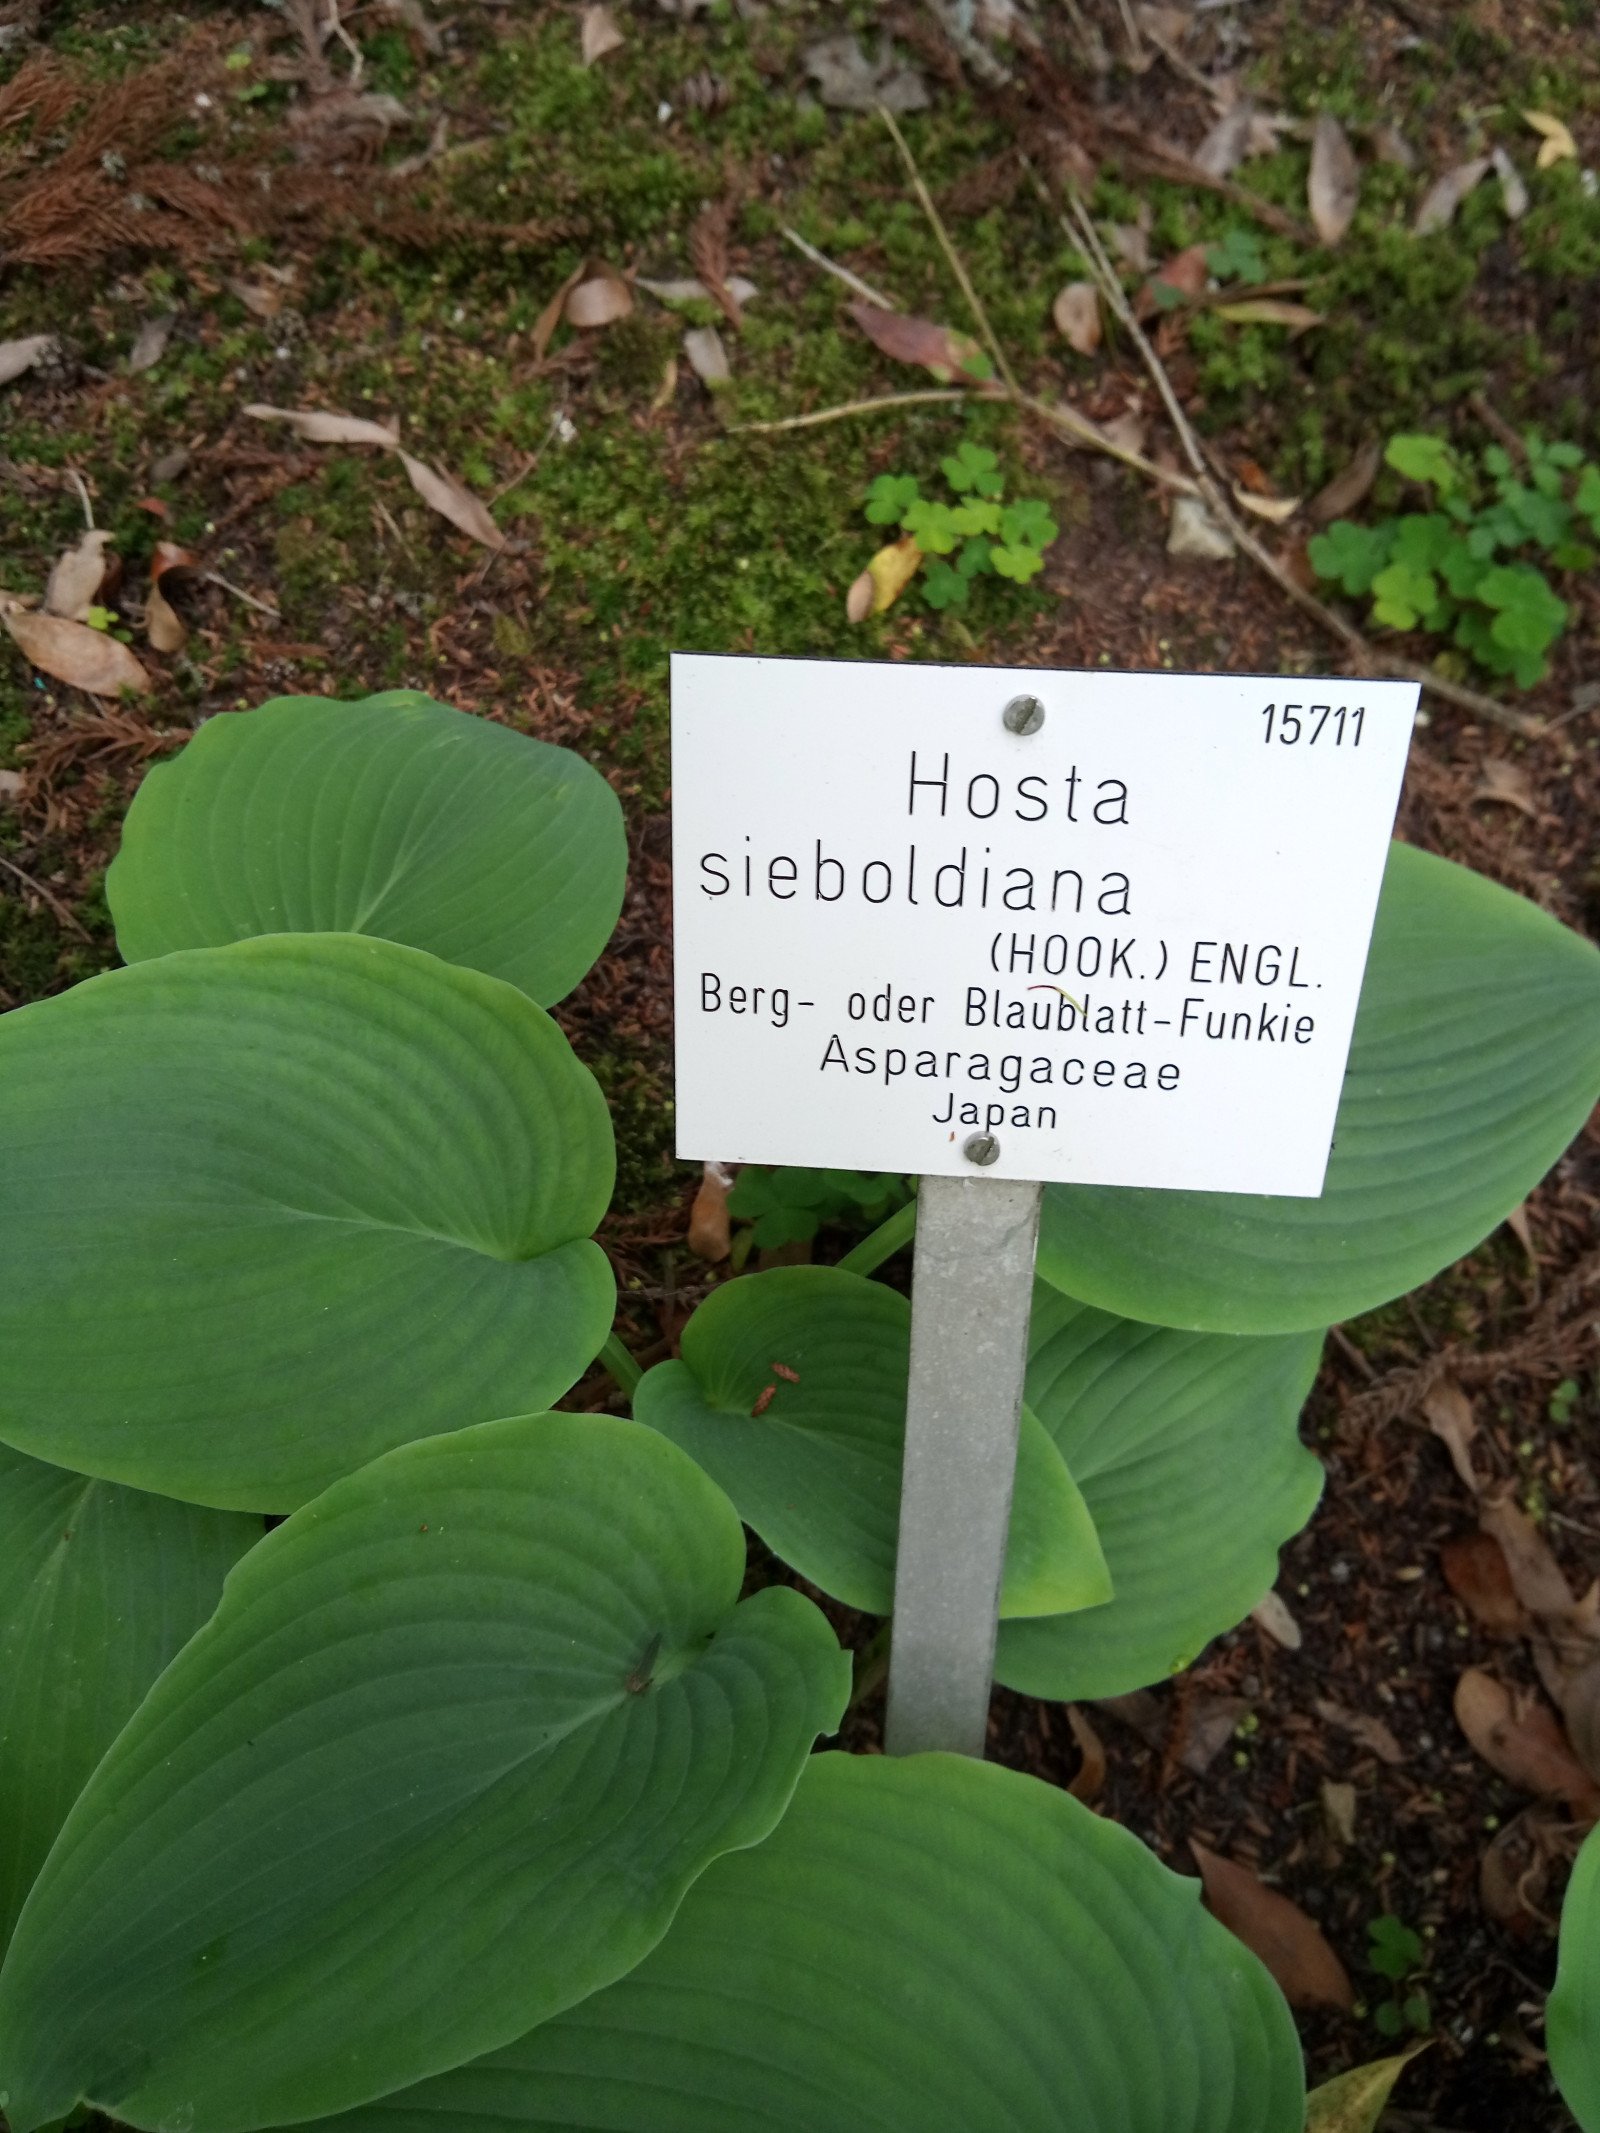 Hosta sieboldiana - Entire plant